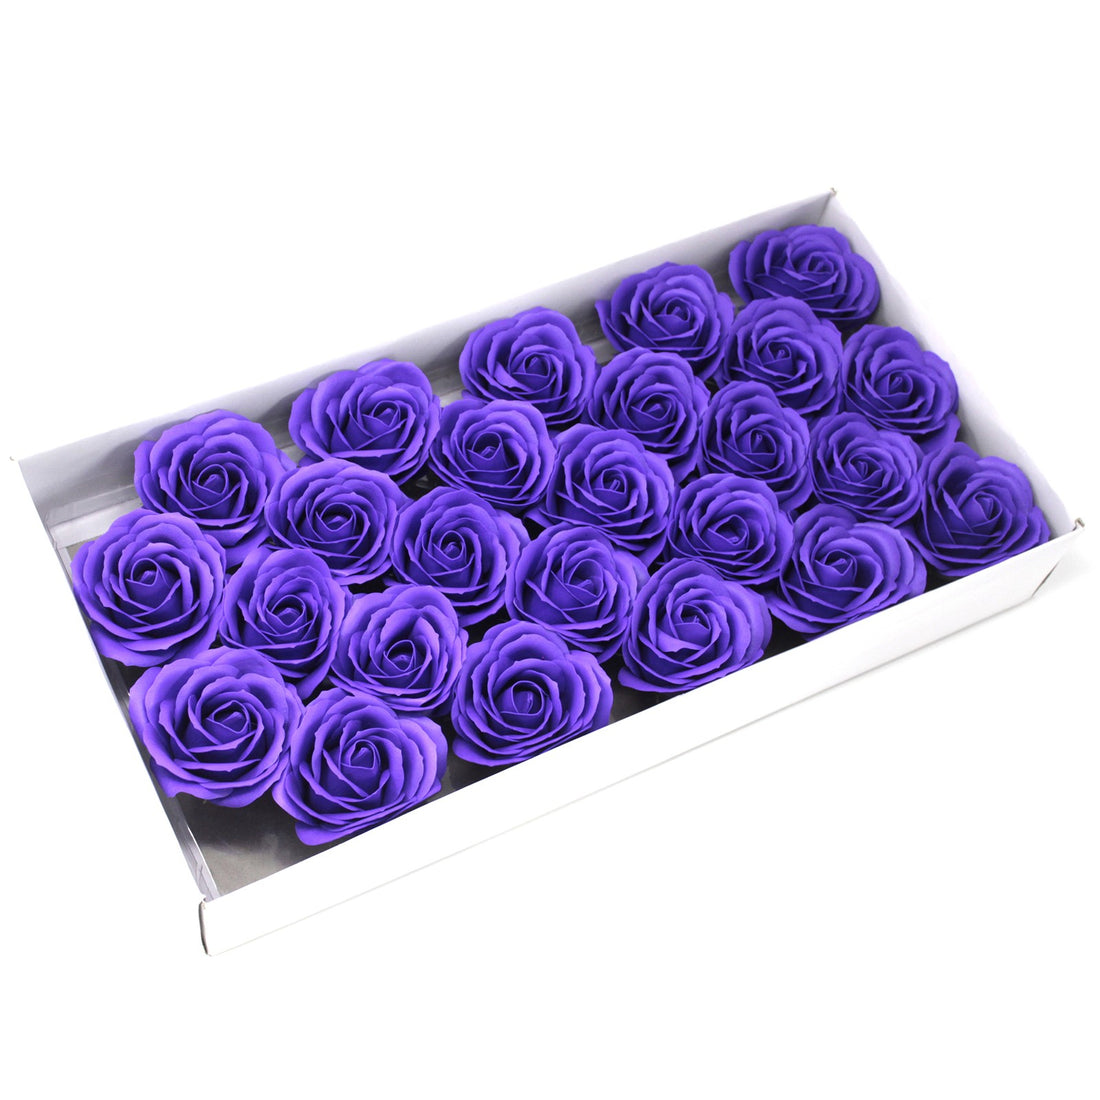 Craft Soap Flowers - Lrg Rose - Violet x 10 pcs